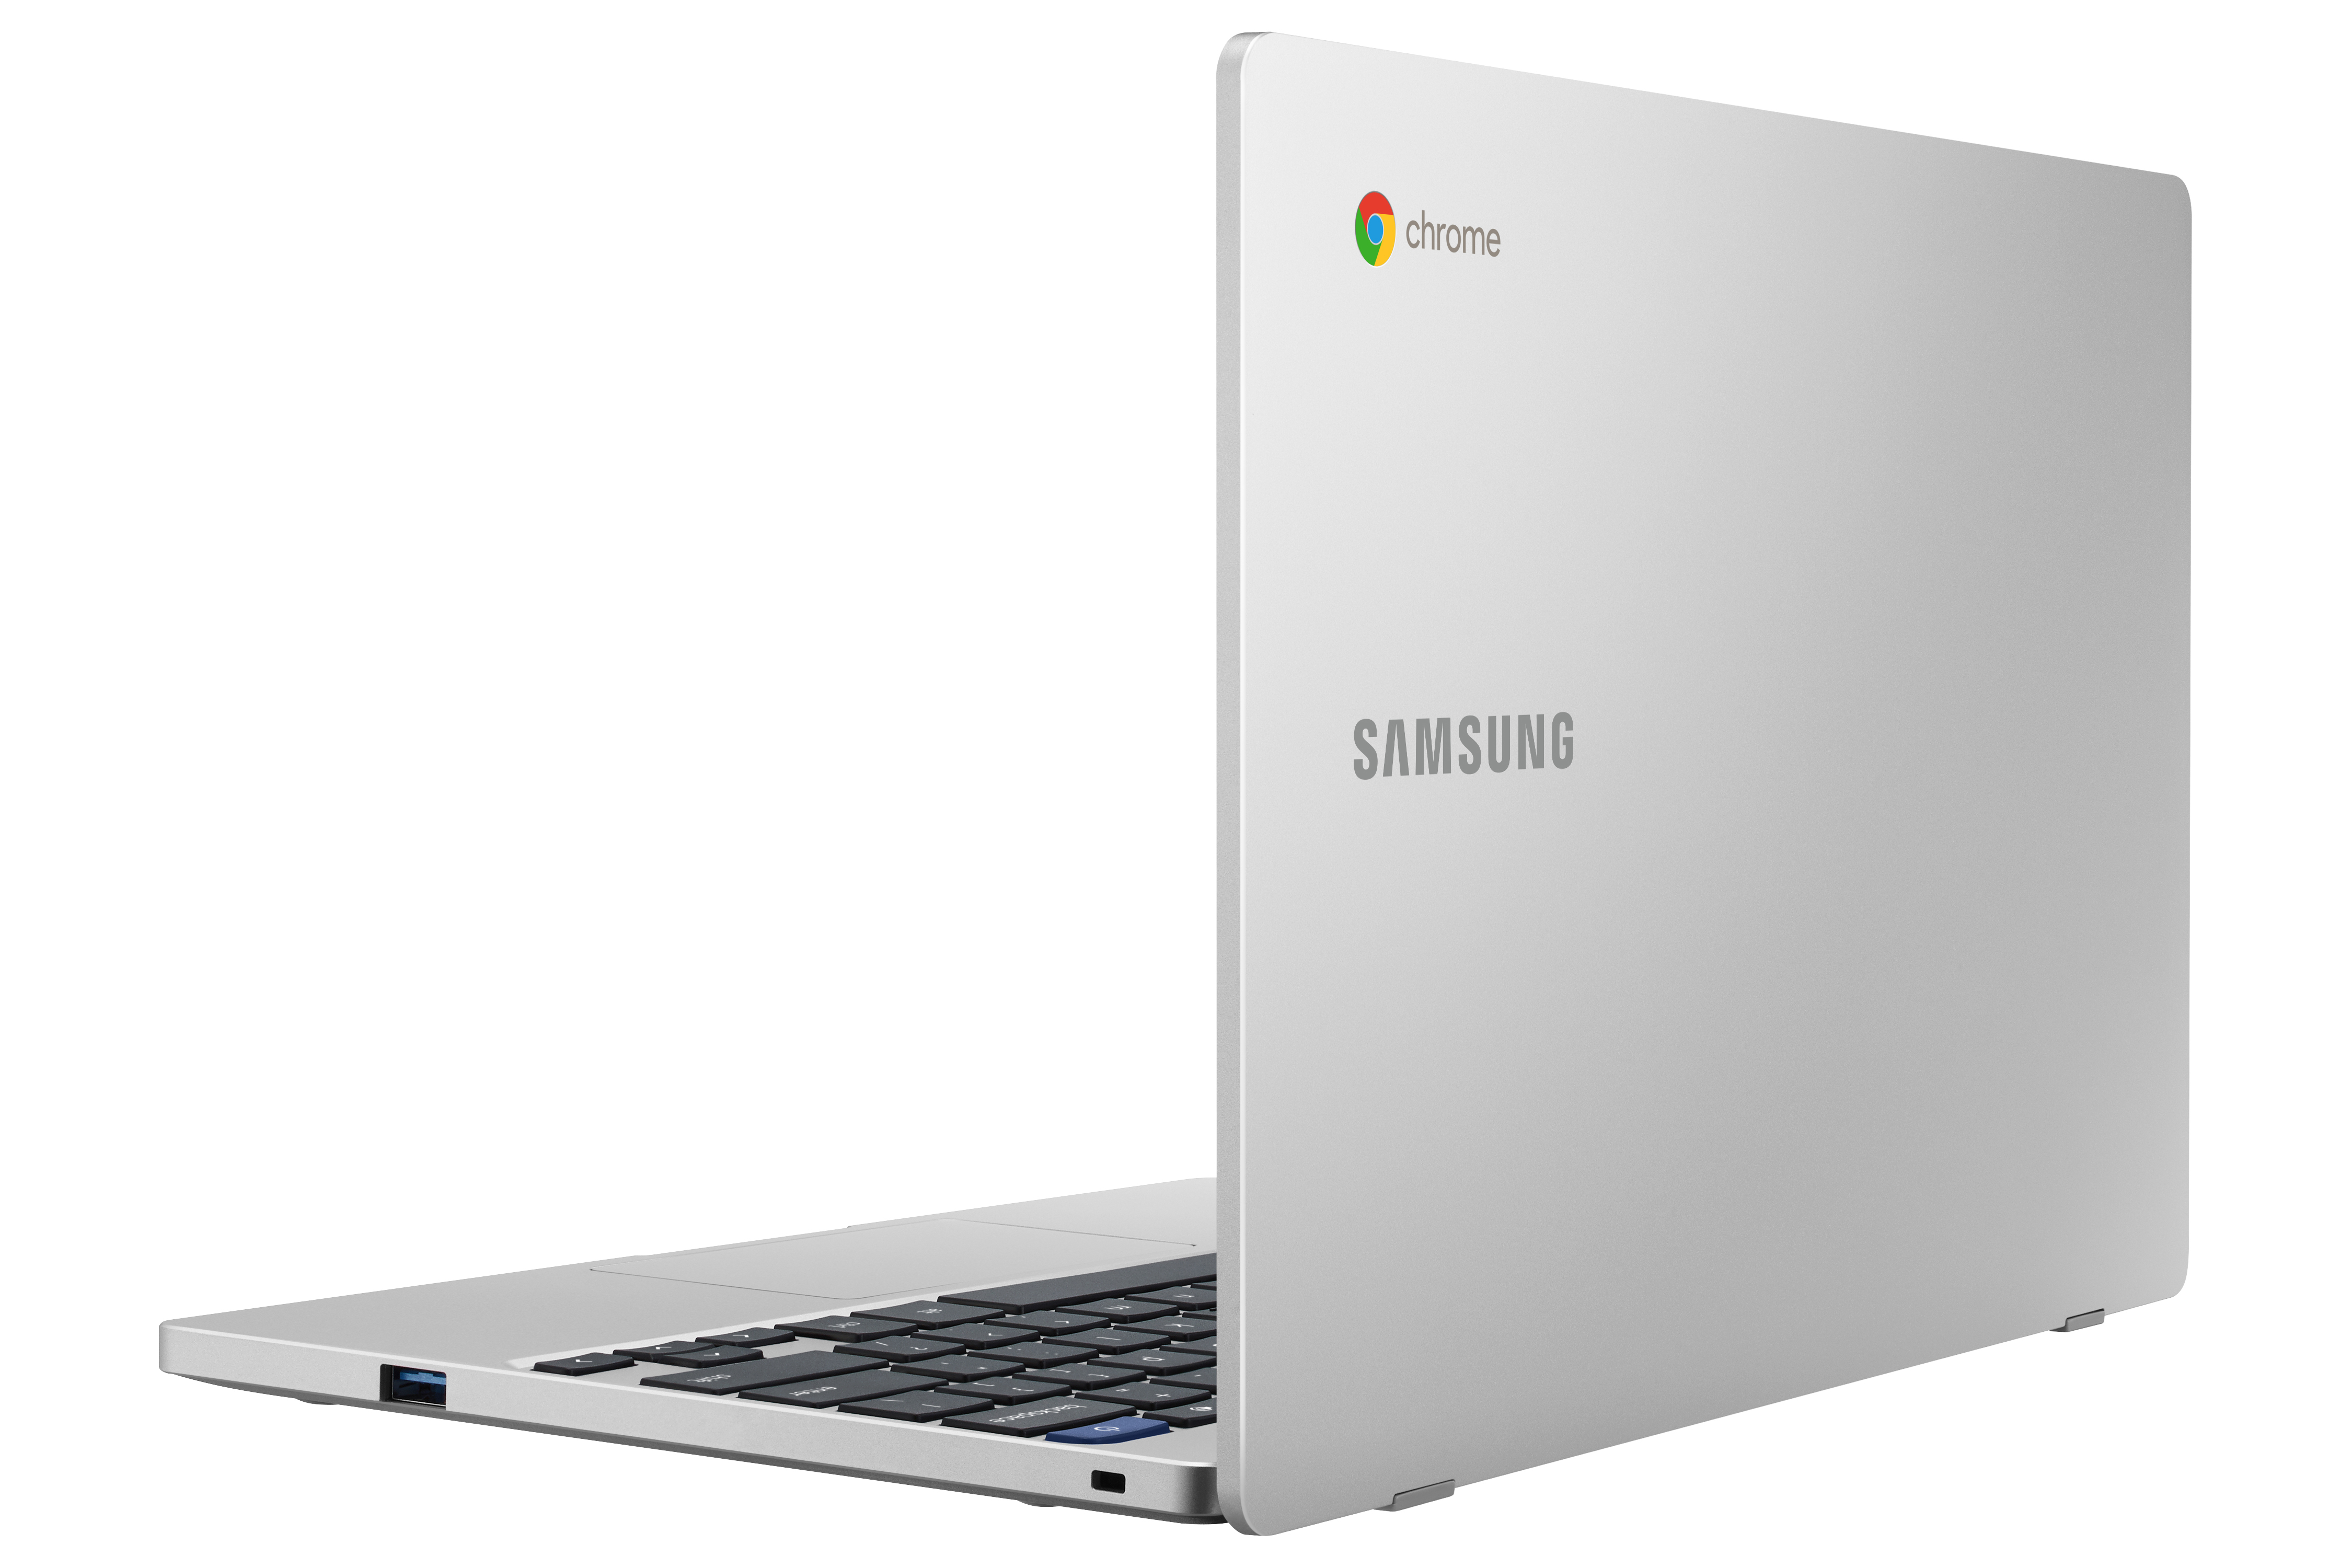 samsung google chrome laptop